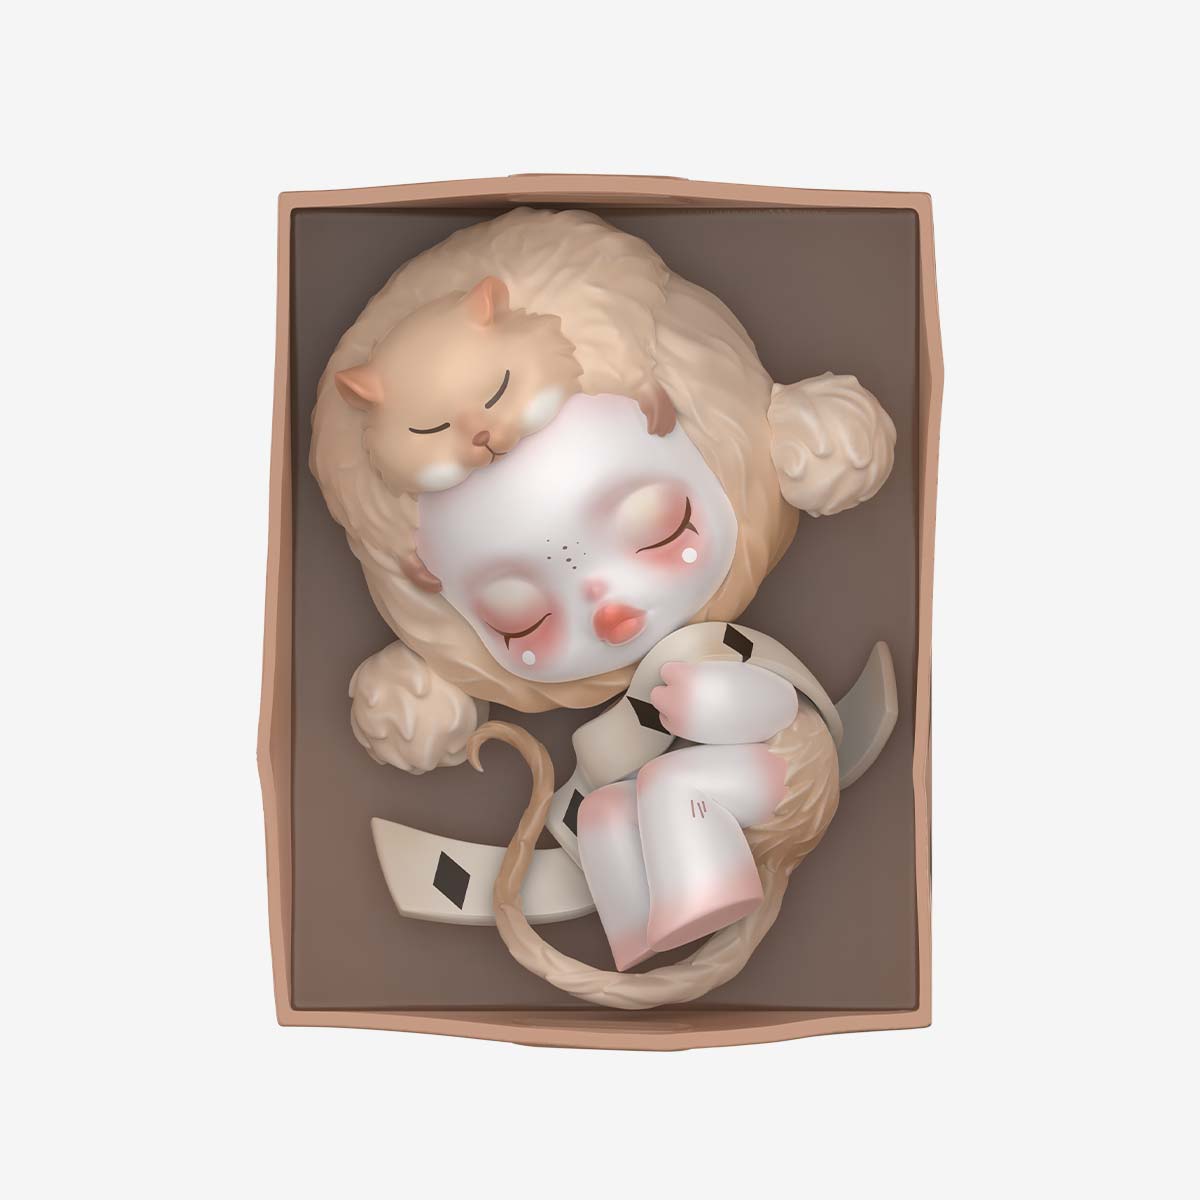 【Restock】Pop Mart Skullpanda Everyday Wonderland Series Blind Box Random Style